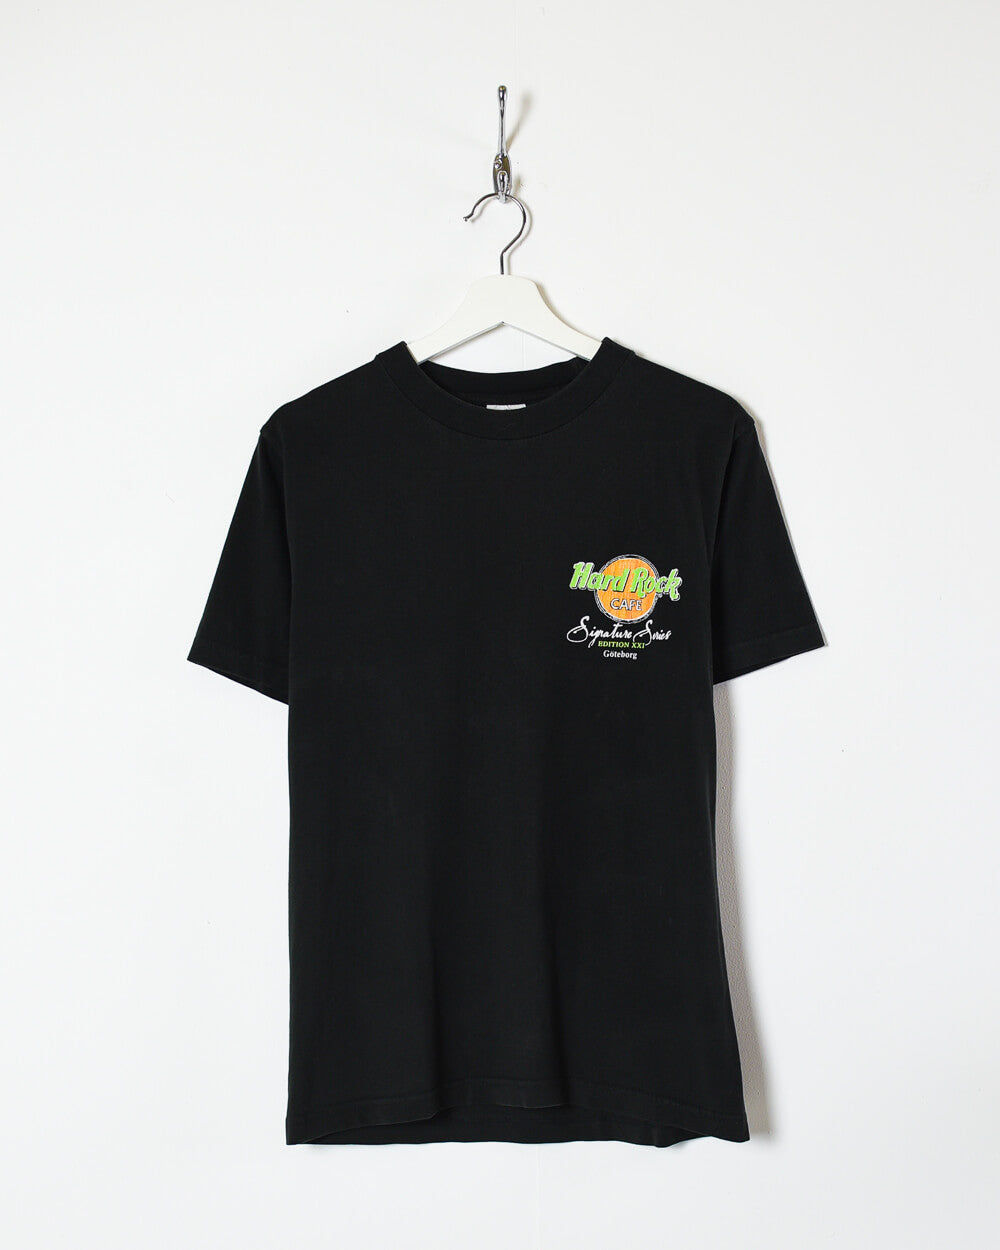 Black Hard Rock Café Signature Series Edition Goteborg T-Shirt - Small